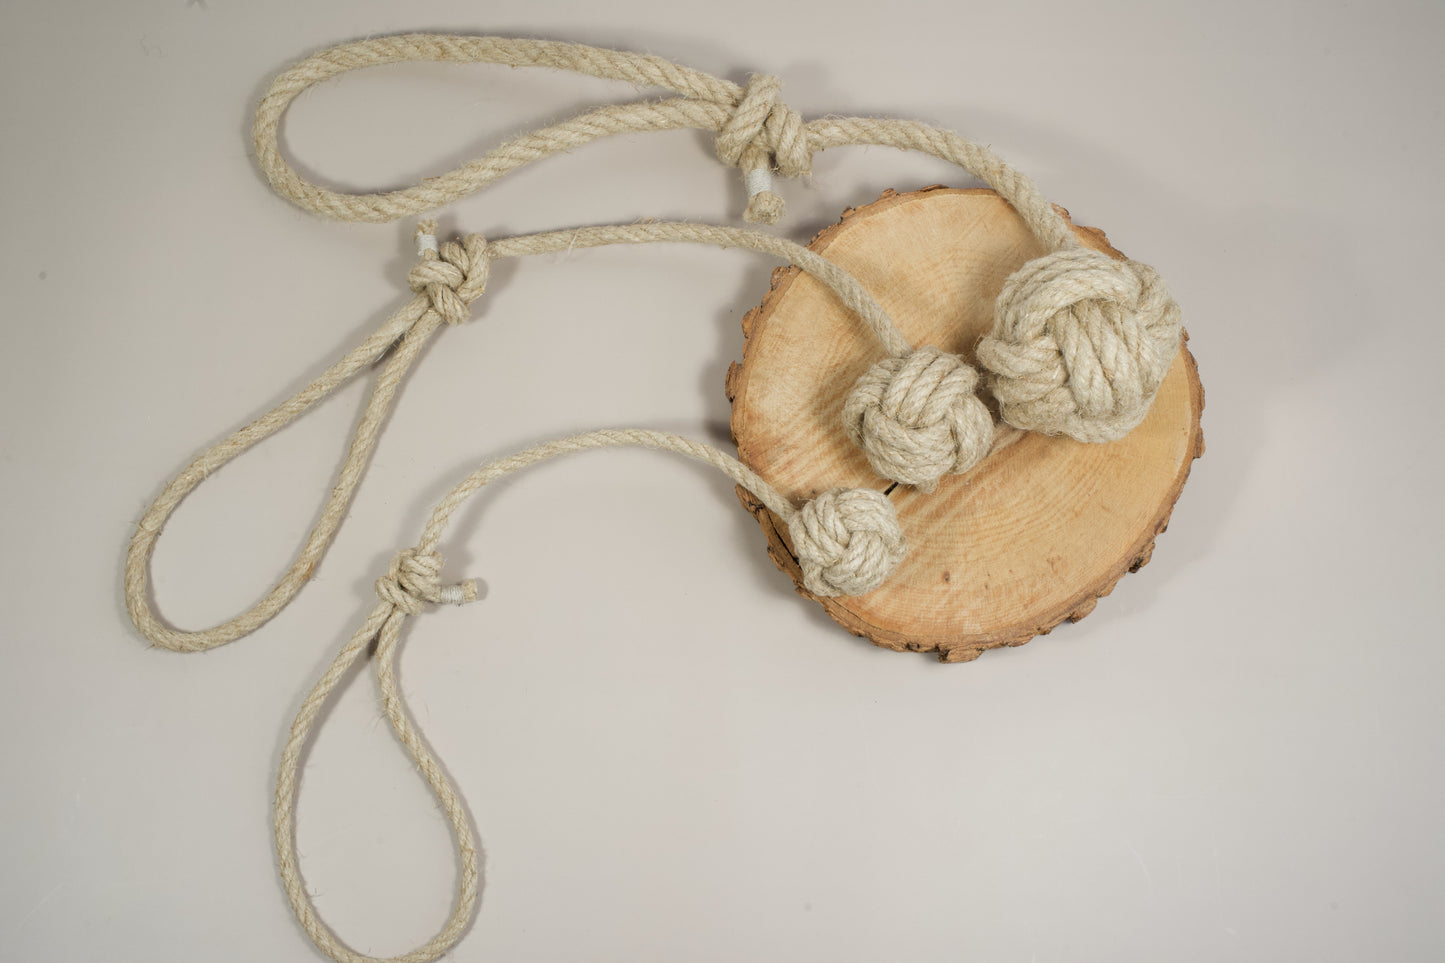 Handmade dog toy made from hemp rope.